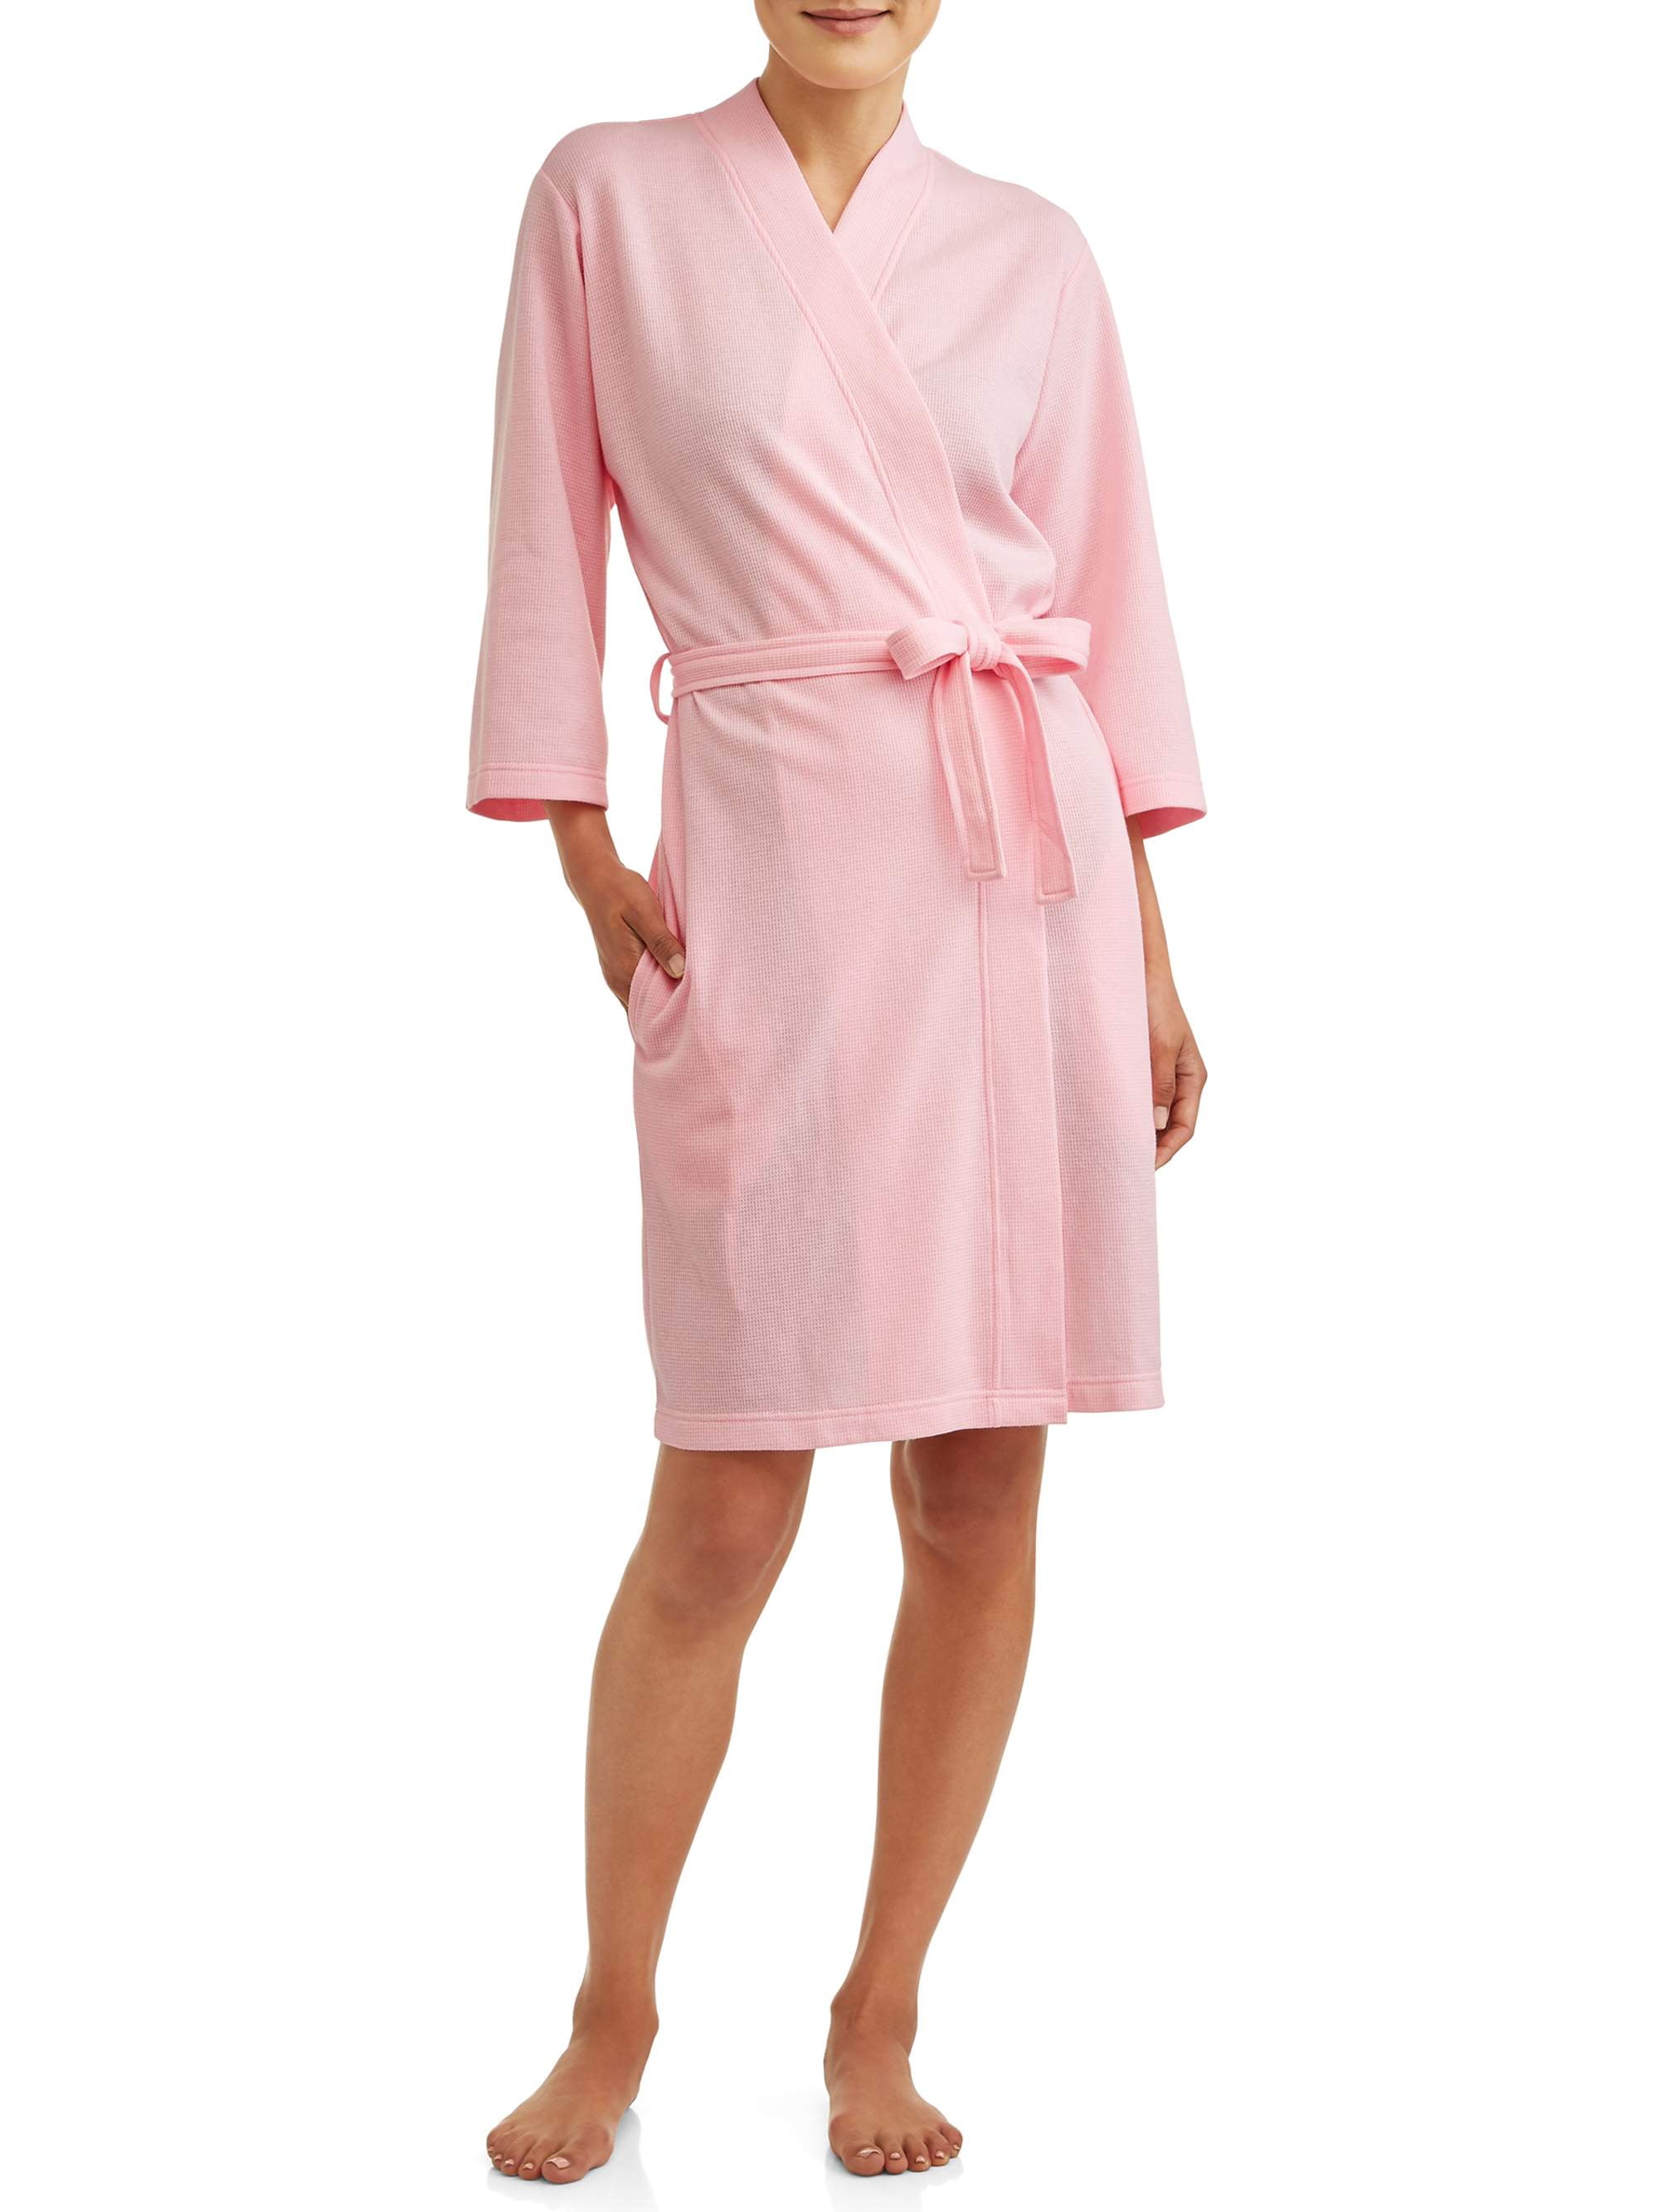 Robe Wrap Fleece Great Length 55” 58” Polyester Made in USA 